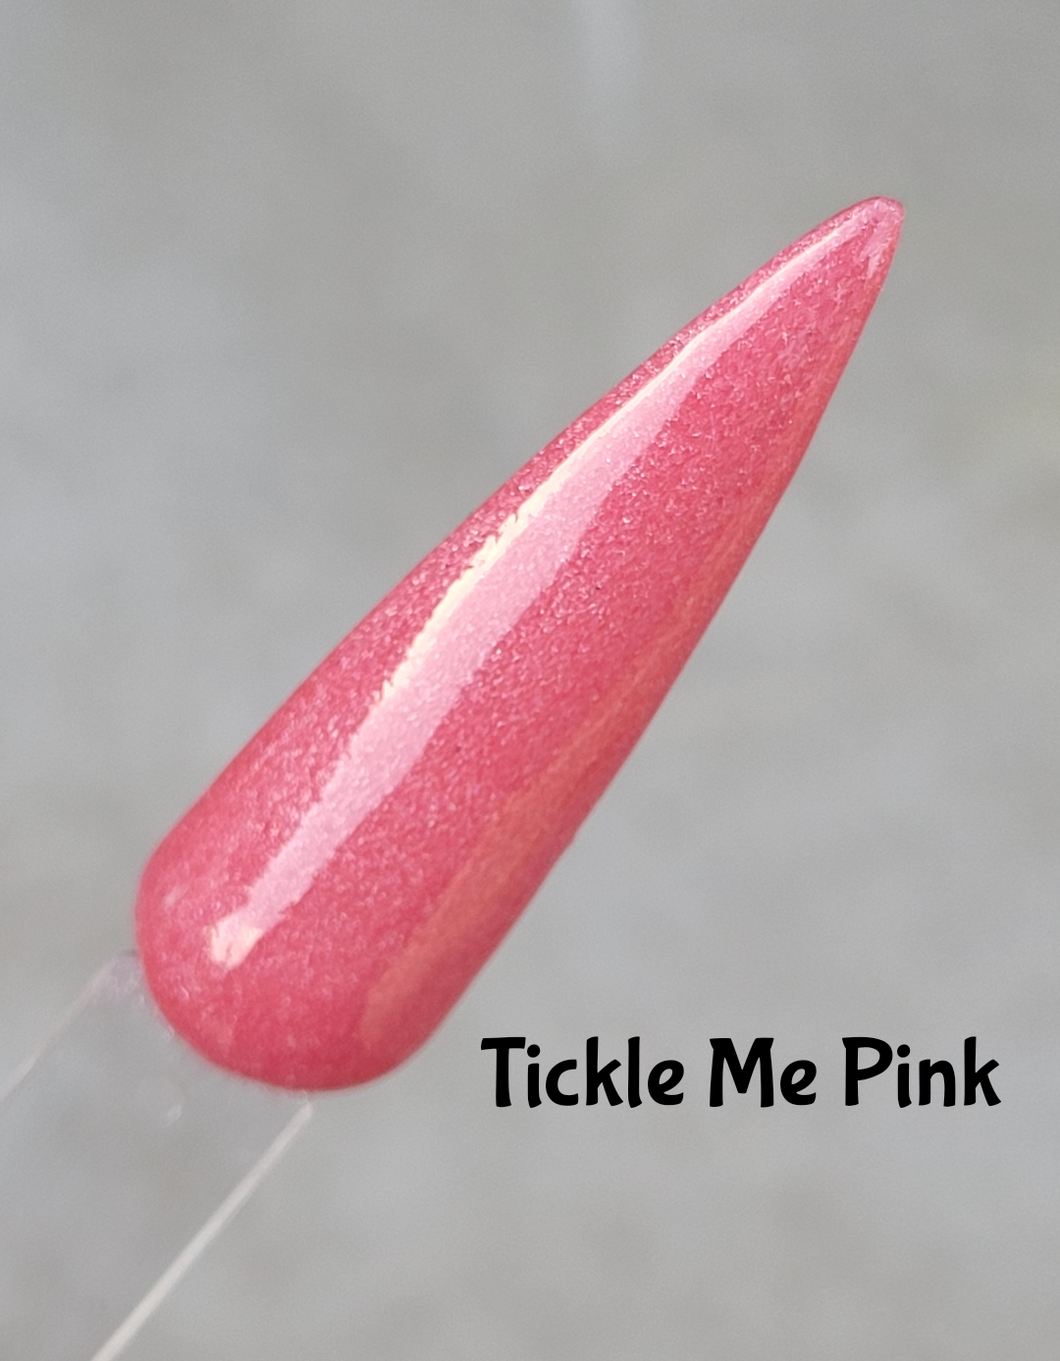 Tickle Me Pink